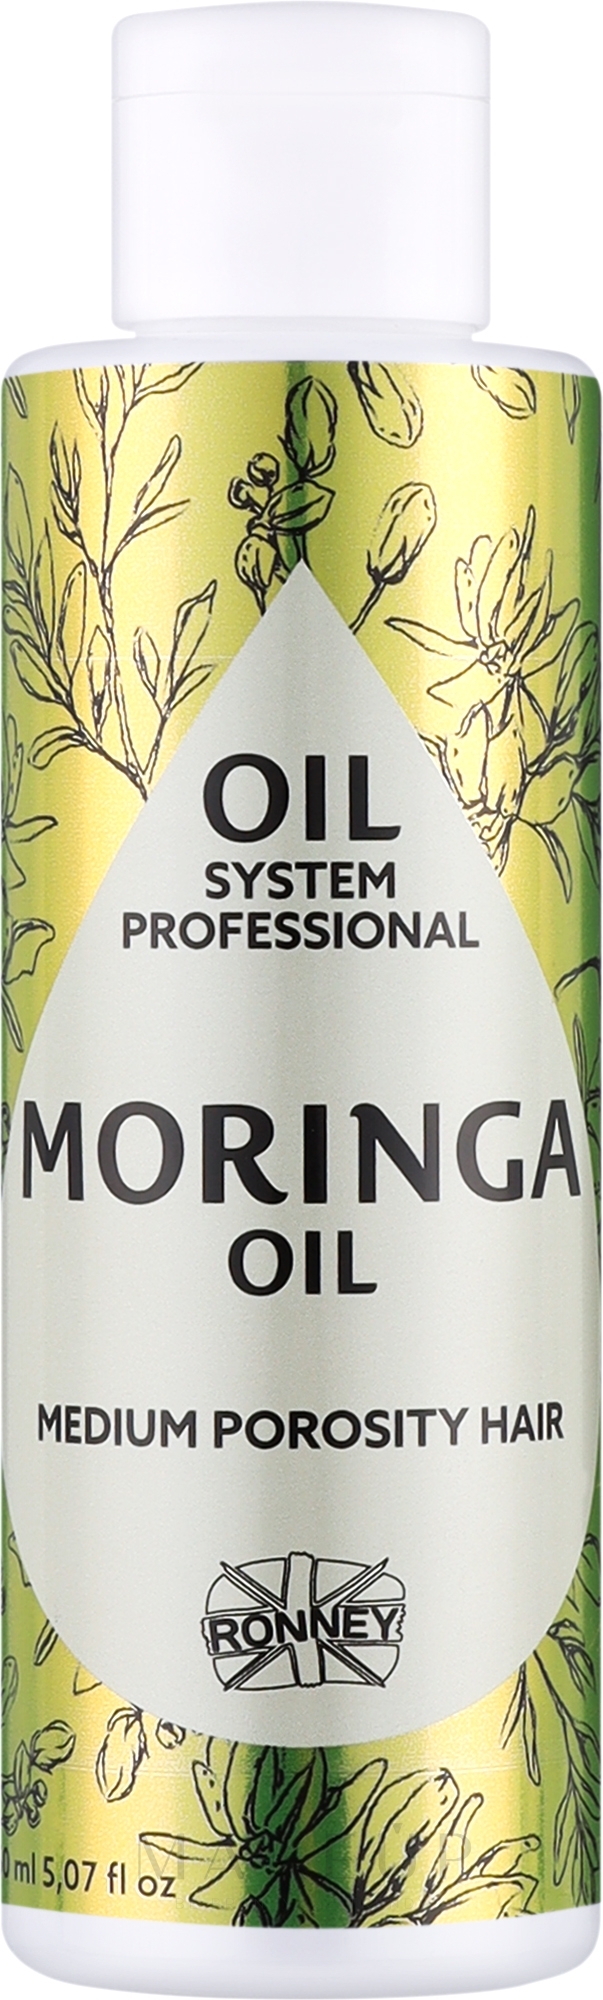 Öl für mittelporöses Haar mit Moringaöl - Ronney Professional Oil System Medium Porosity Hair Moringa Oil — Bild 150 ml